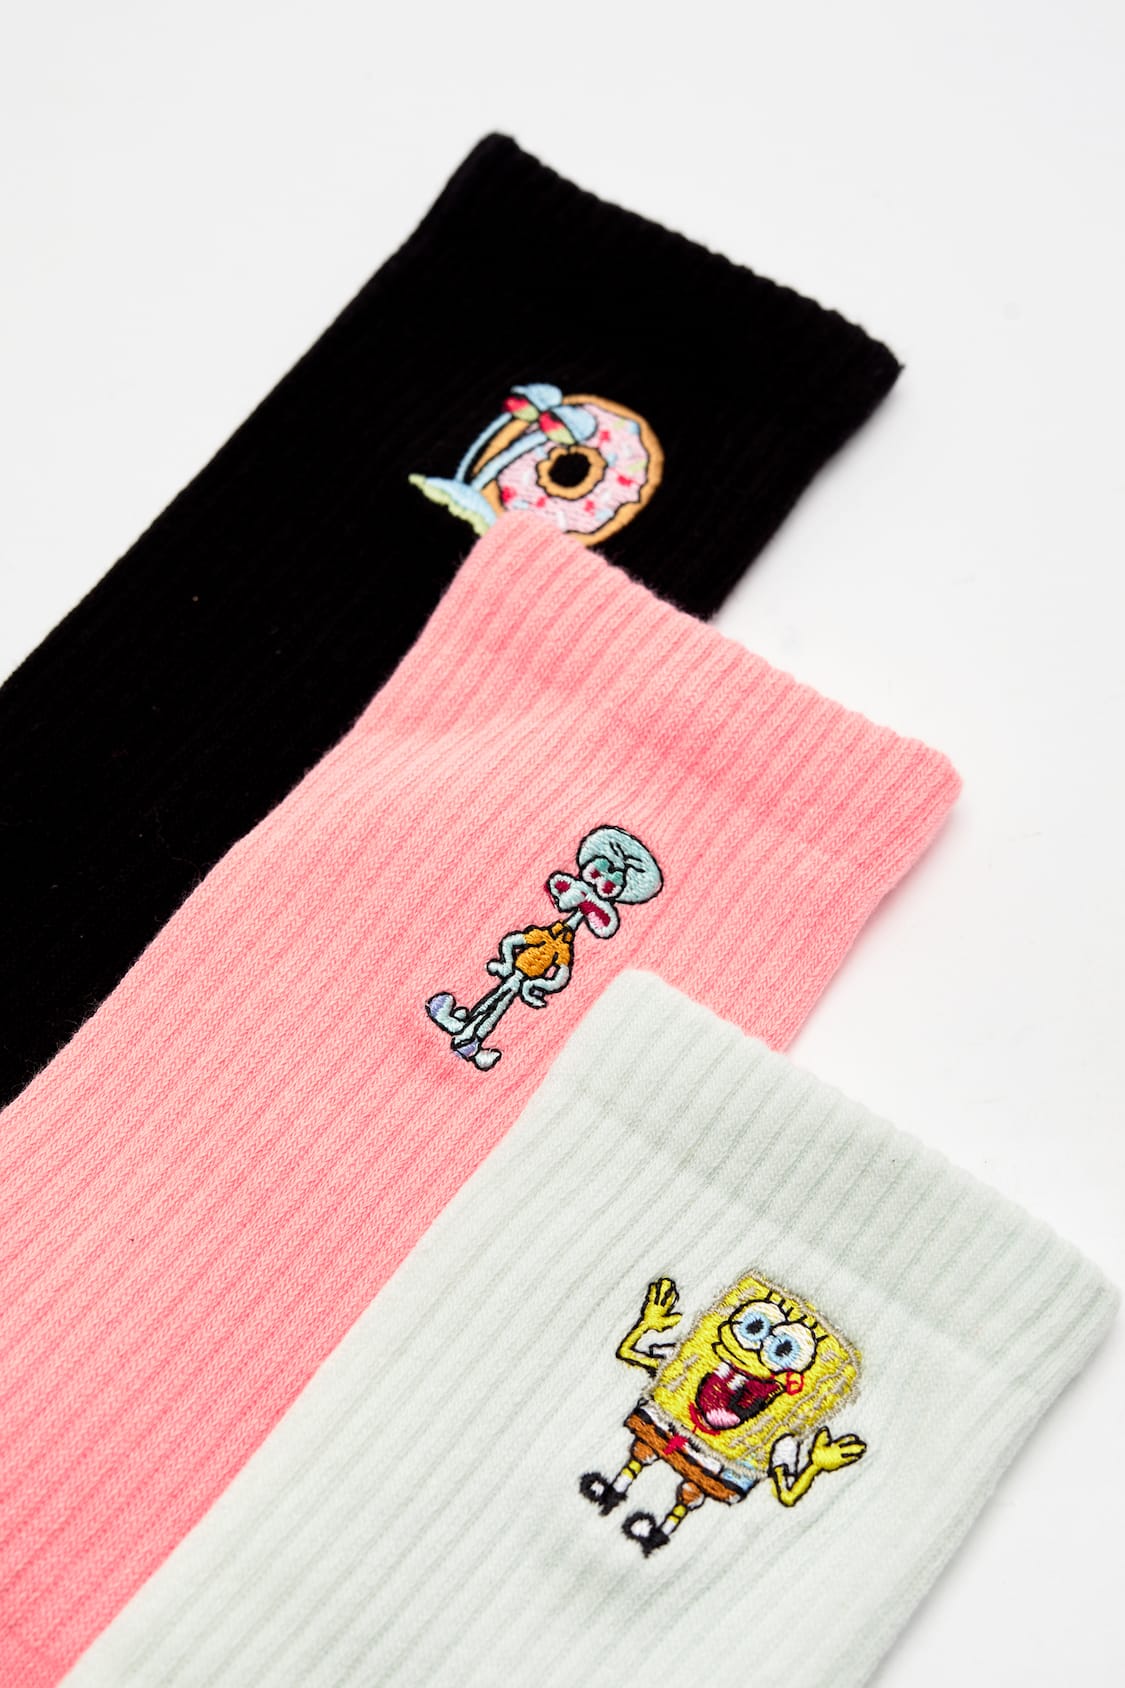 Pack of no-show SpongeBob socks - pull&bear